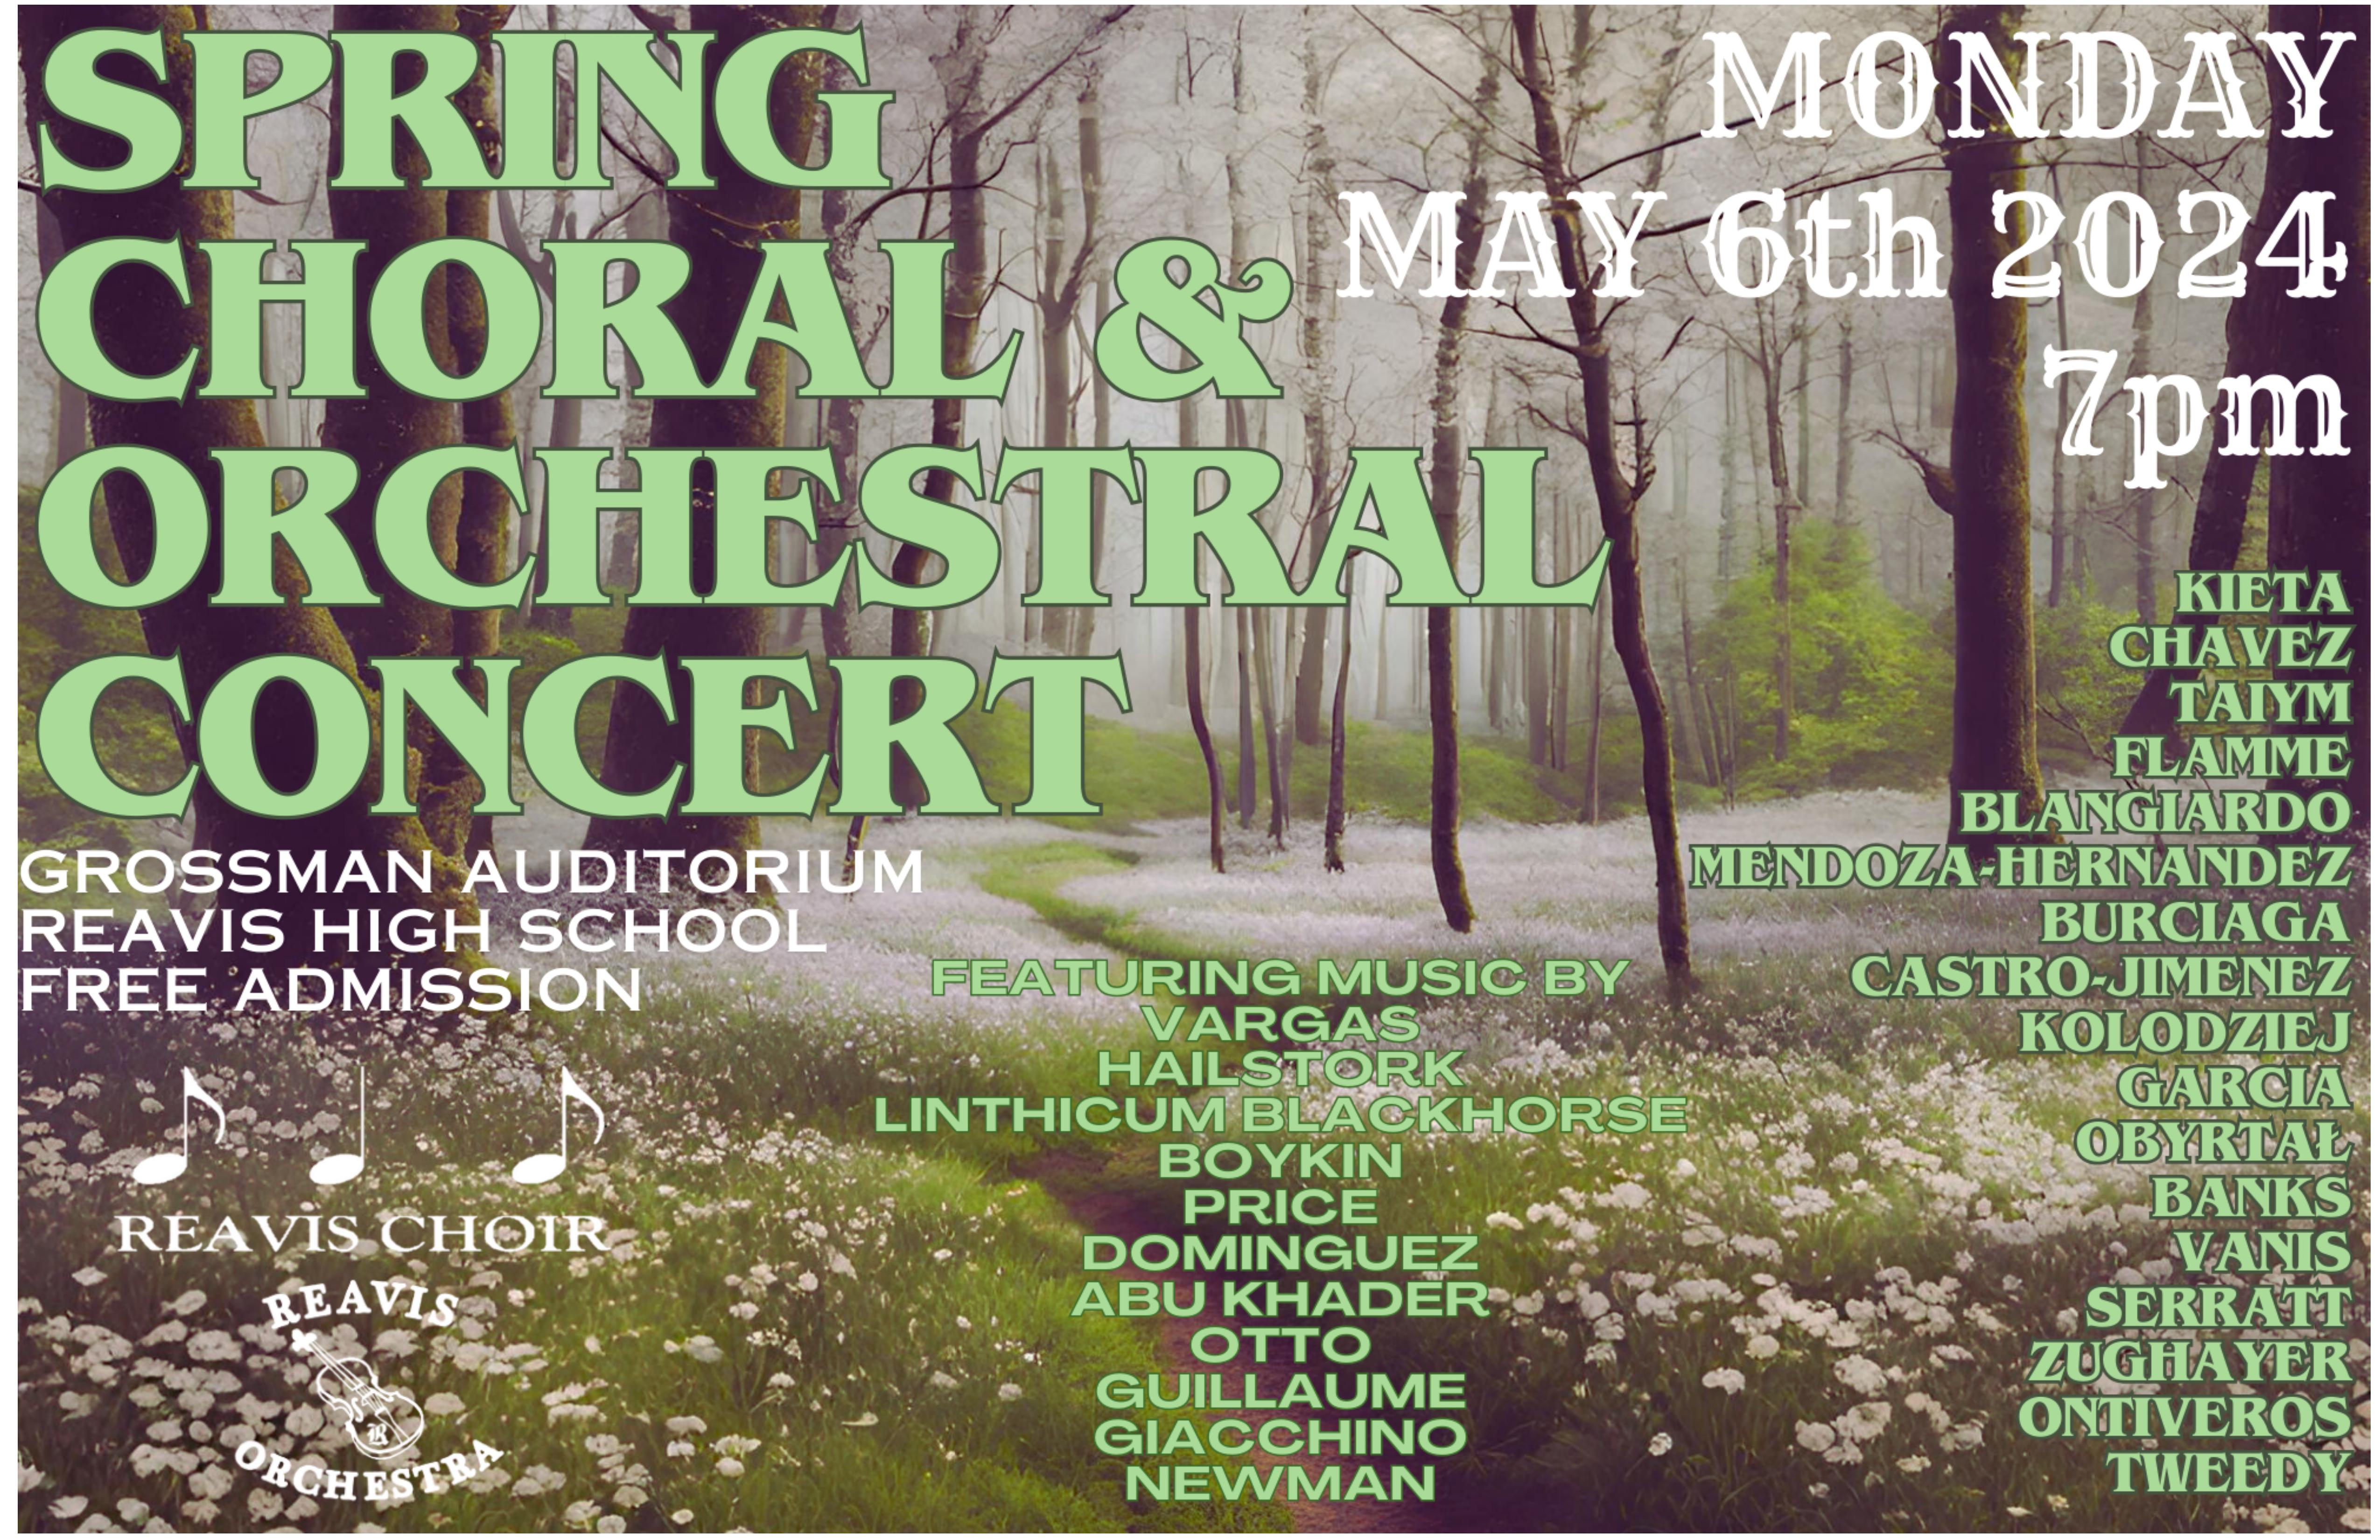 Spring Choral & Orchestral Concert